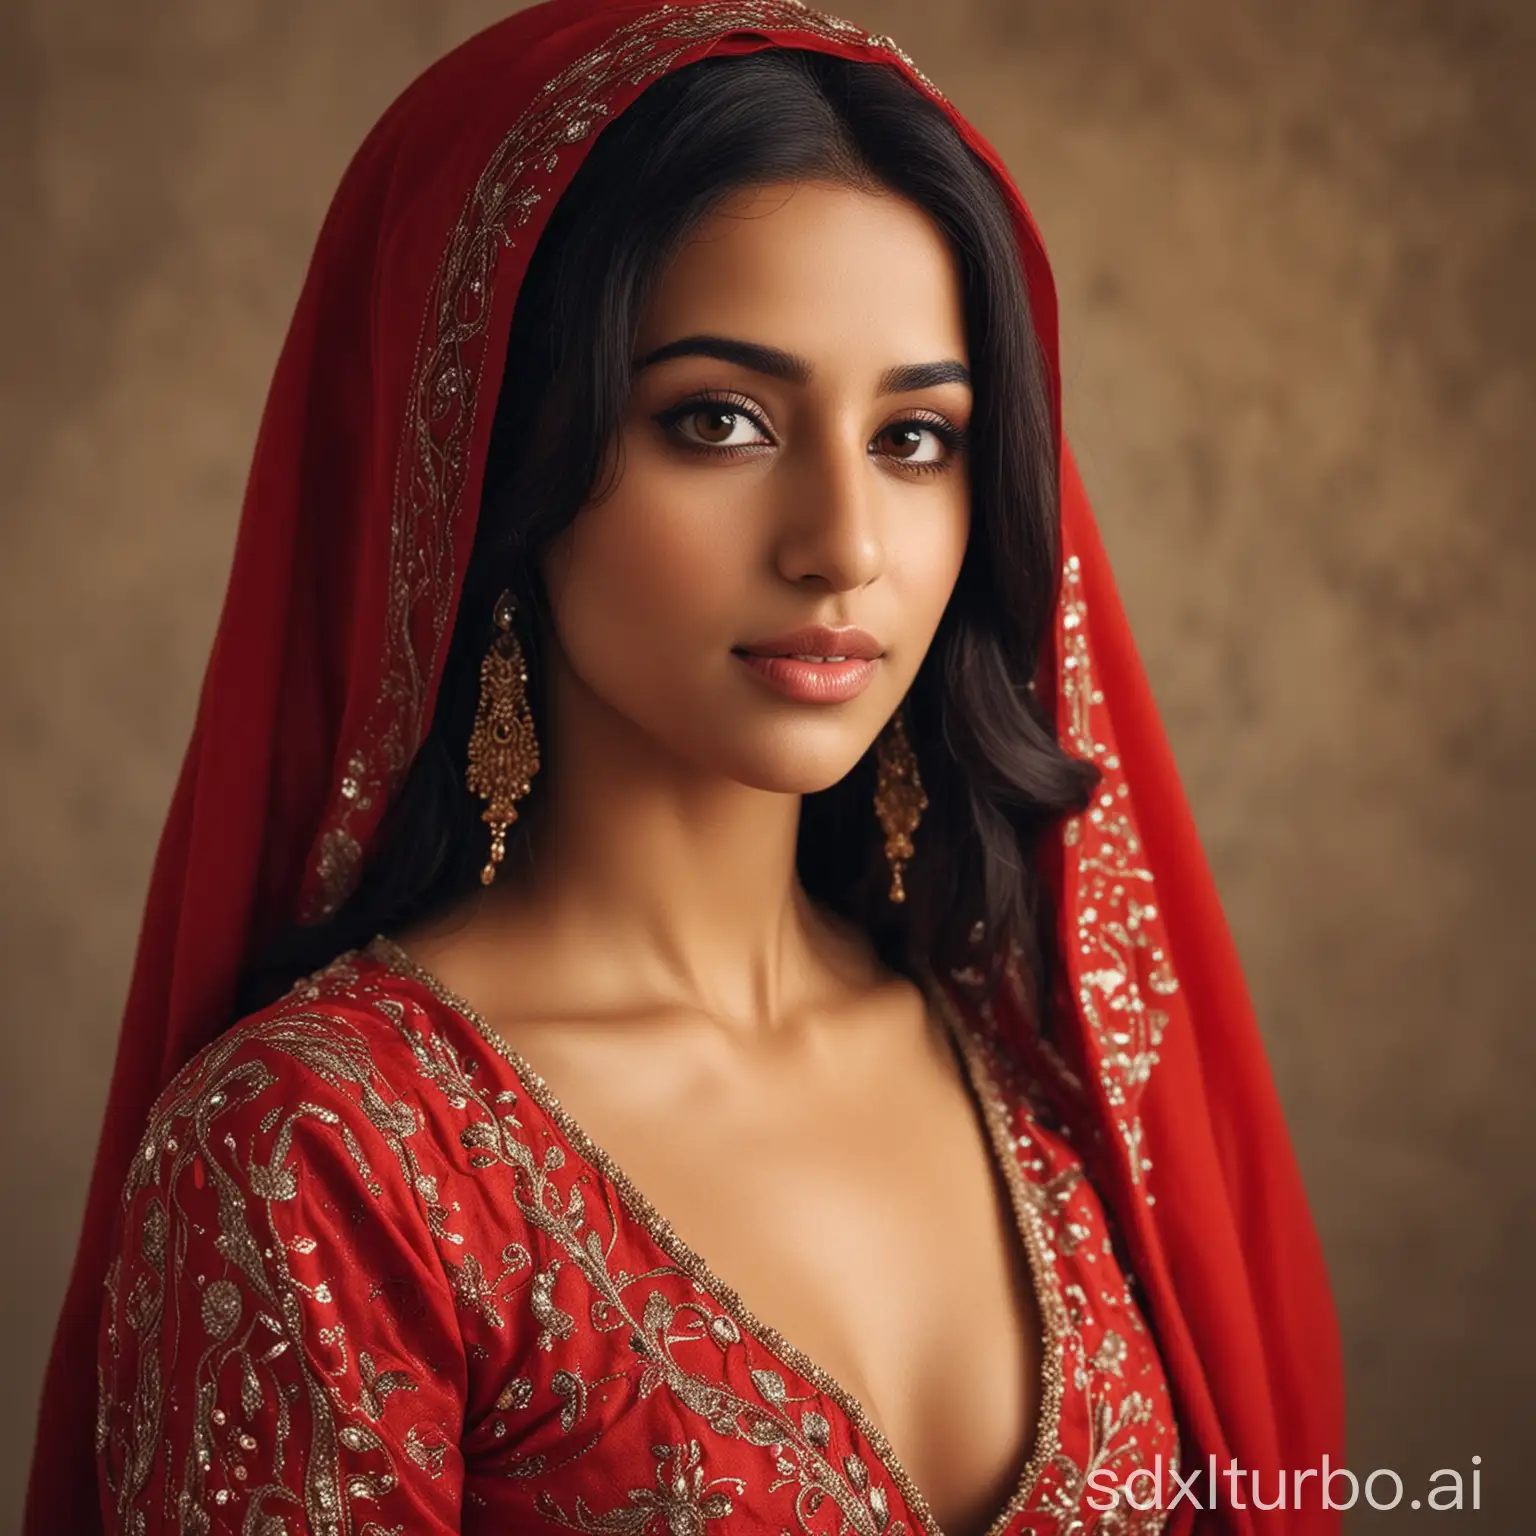 Arabian-Woman-in-Elegant-Red-Dress